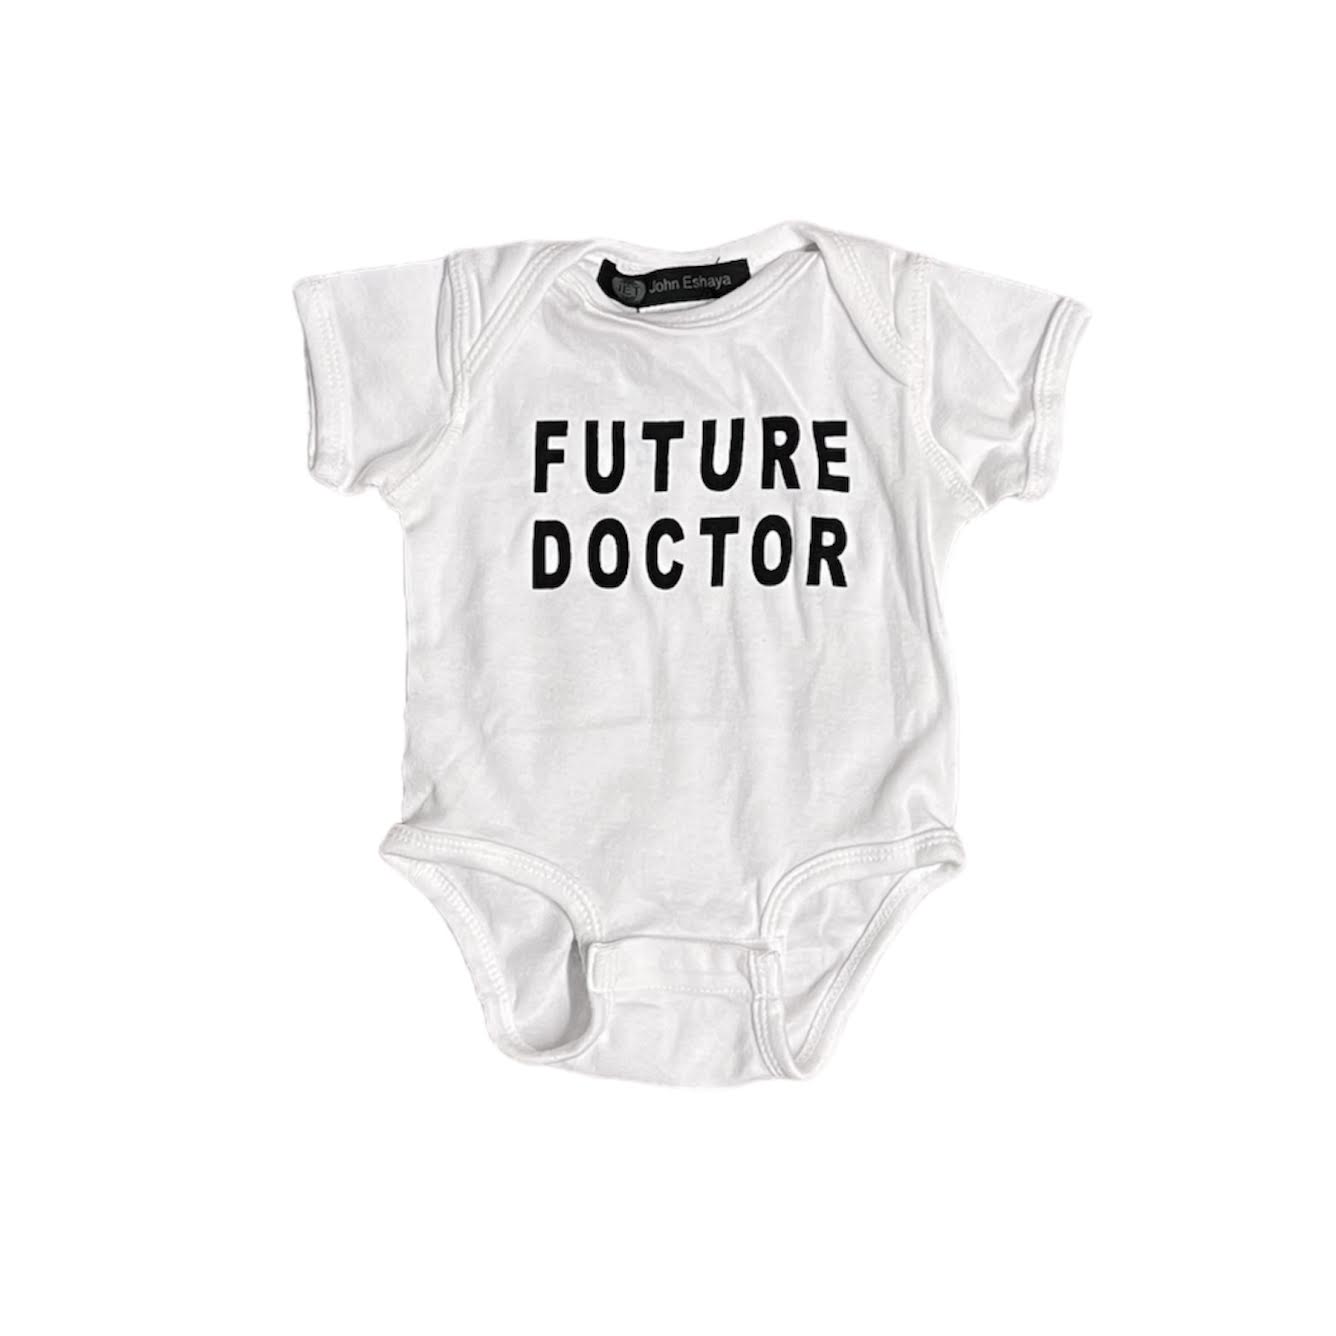 BABY FUTURE DOCTOR ONESIE